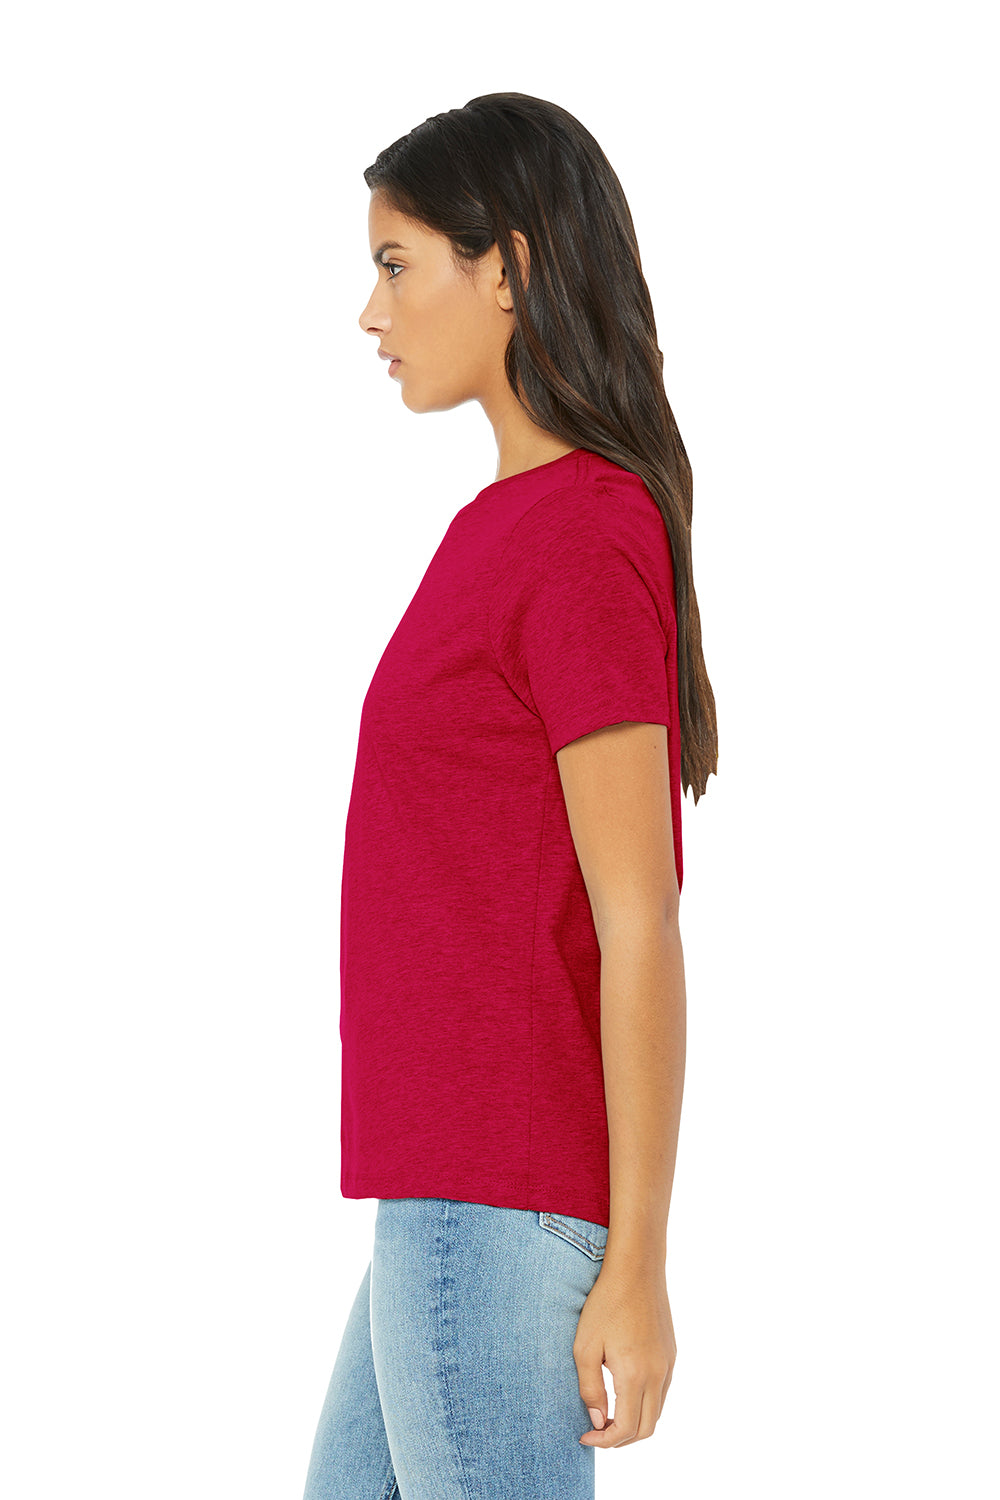 Bella + Canvas BC6400CVC/6400CVC Womens CVC Short Sleeve Crewneck T-Shirt Heather Red Model Side